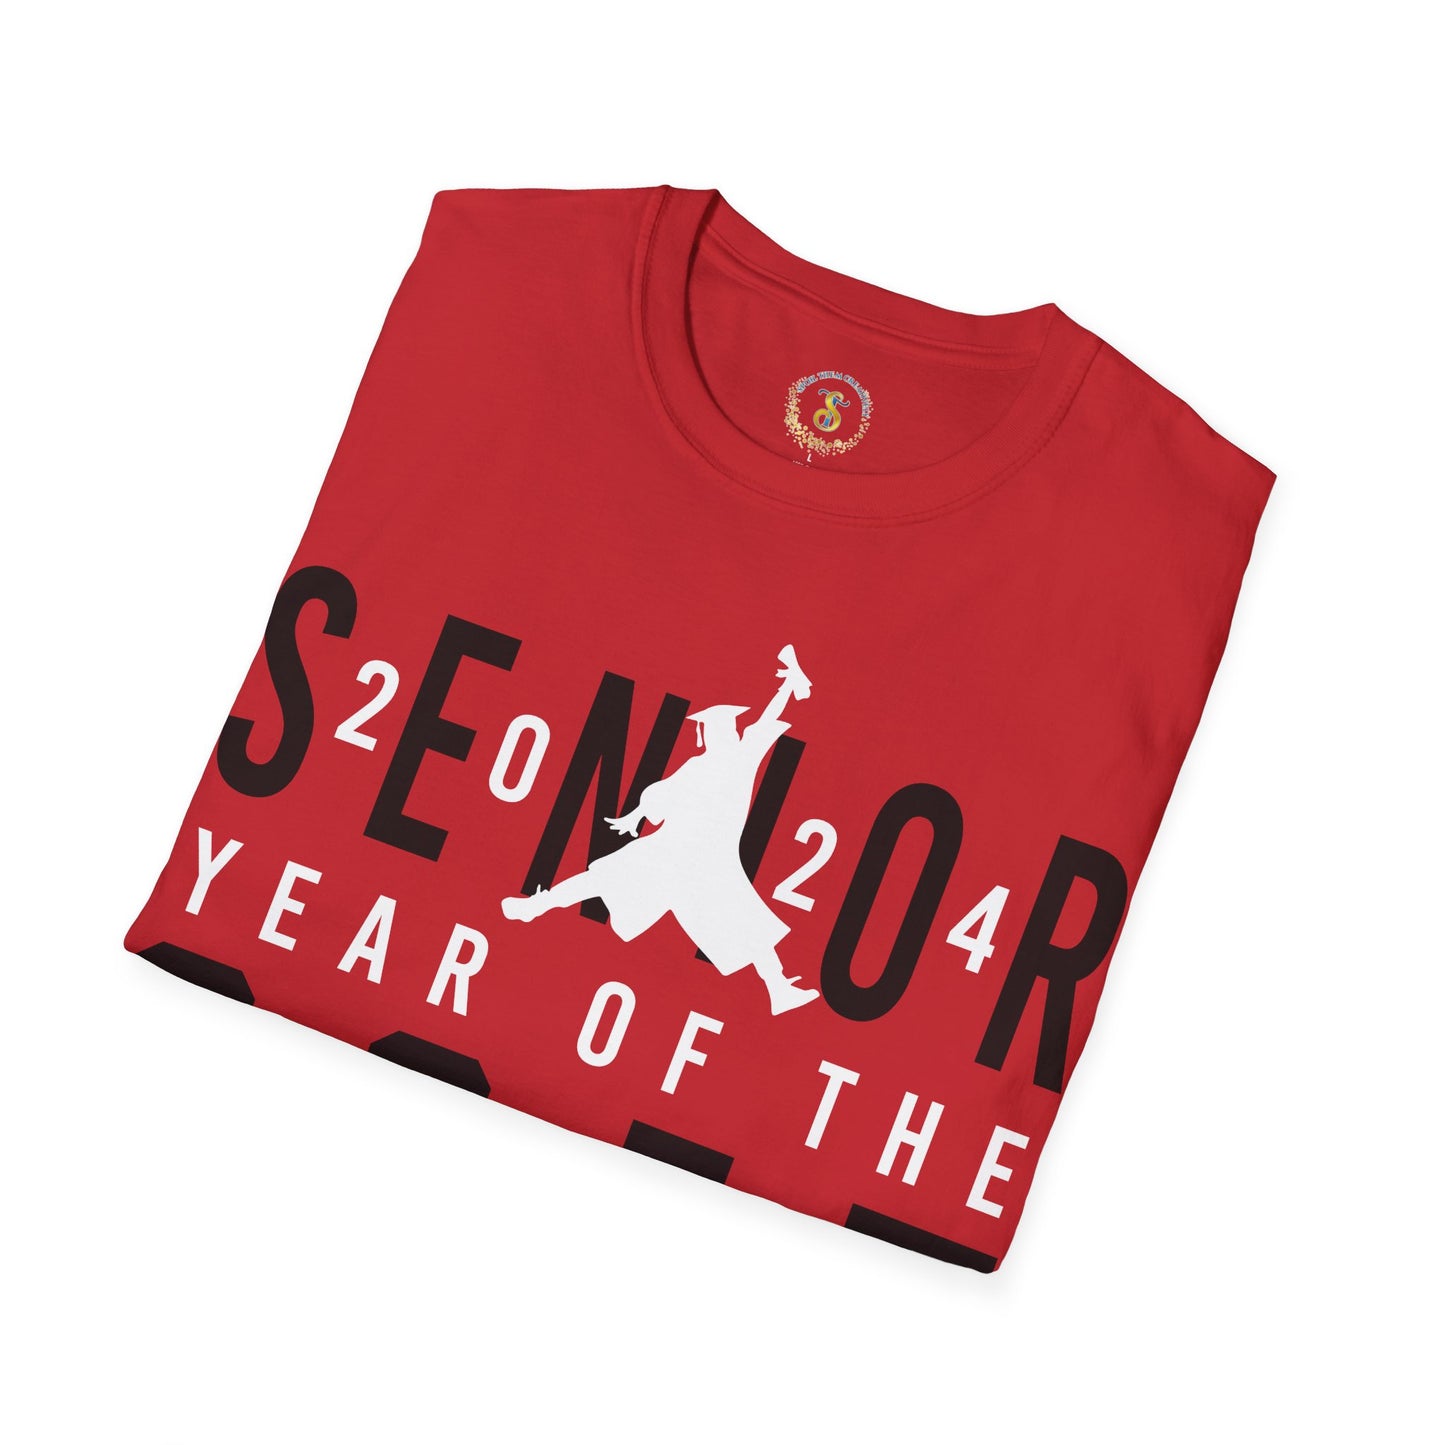 Senior | Year of the GOAT T-Shirt